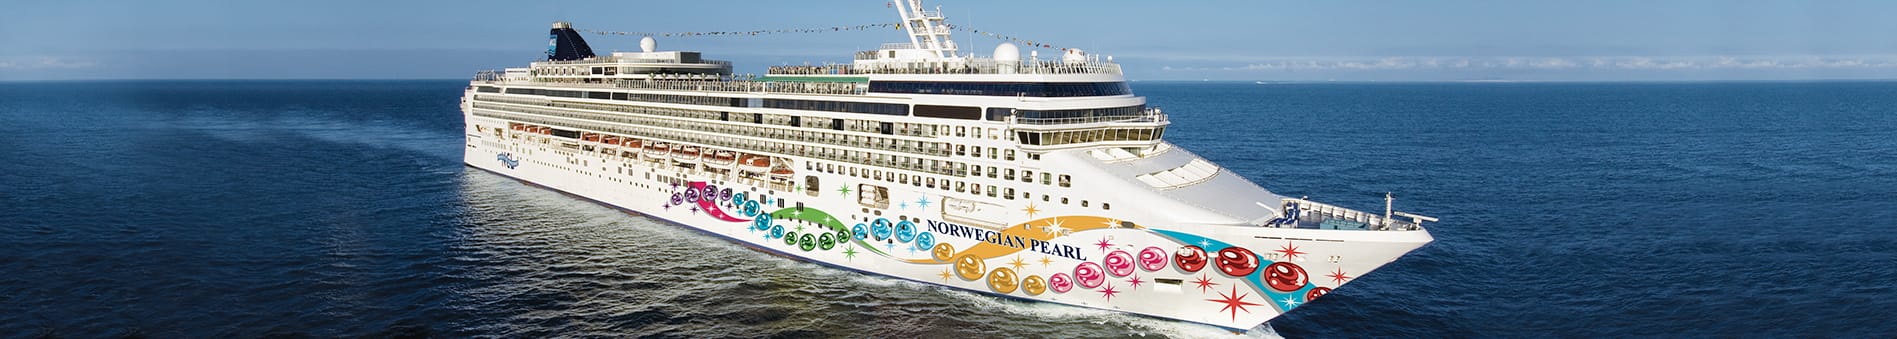 norwegian pearl cruise schedule